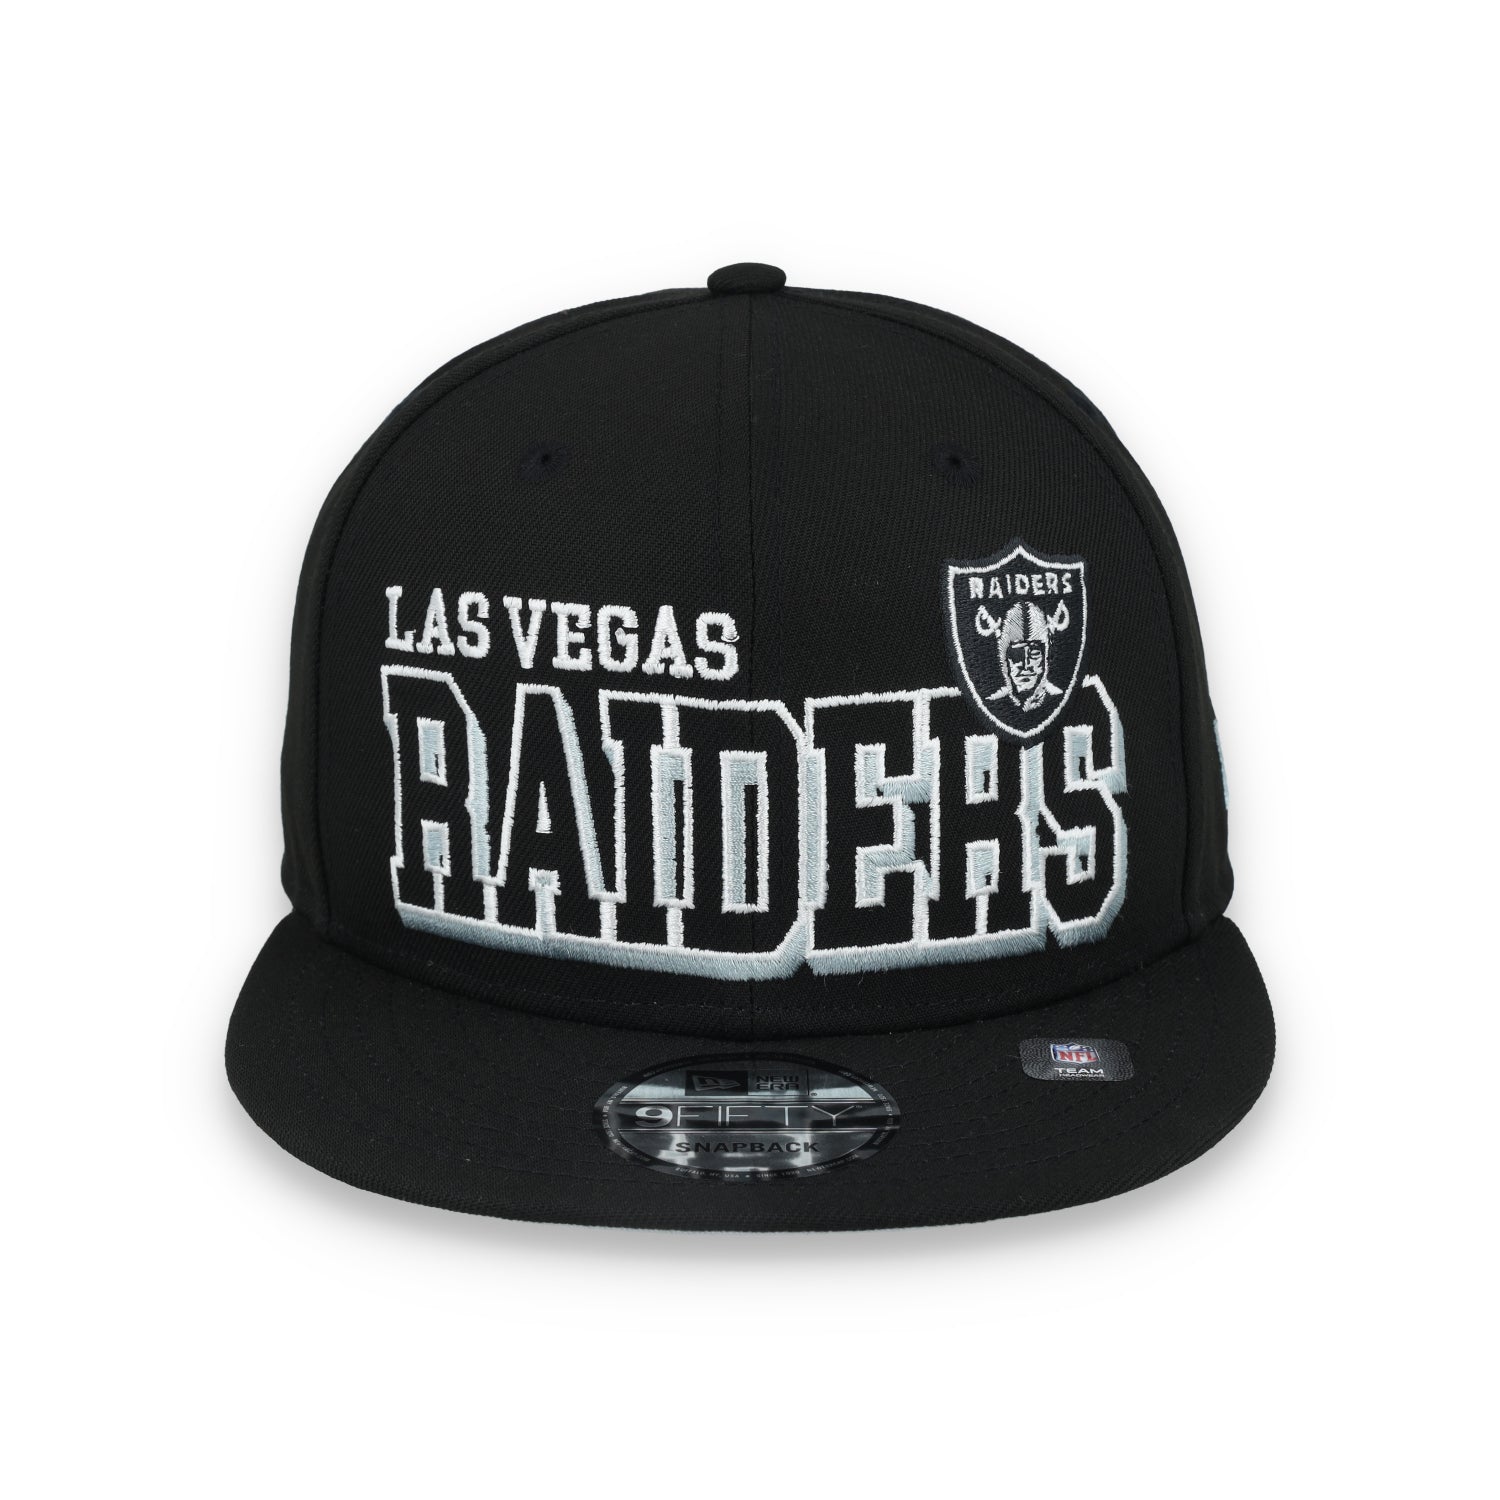 New Era Las Vegas Raiders Game Day 9FIFTY Snapback Hat